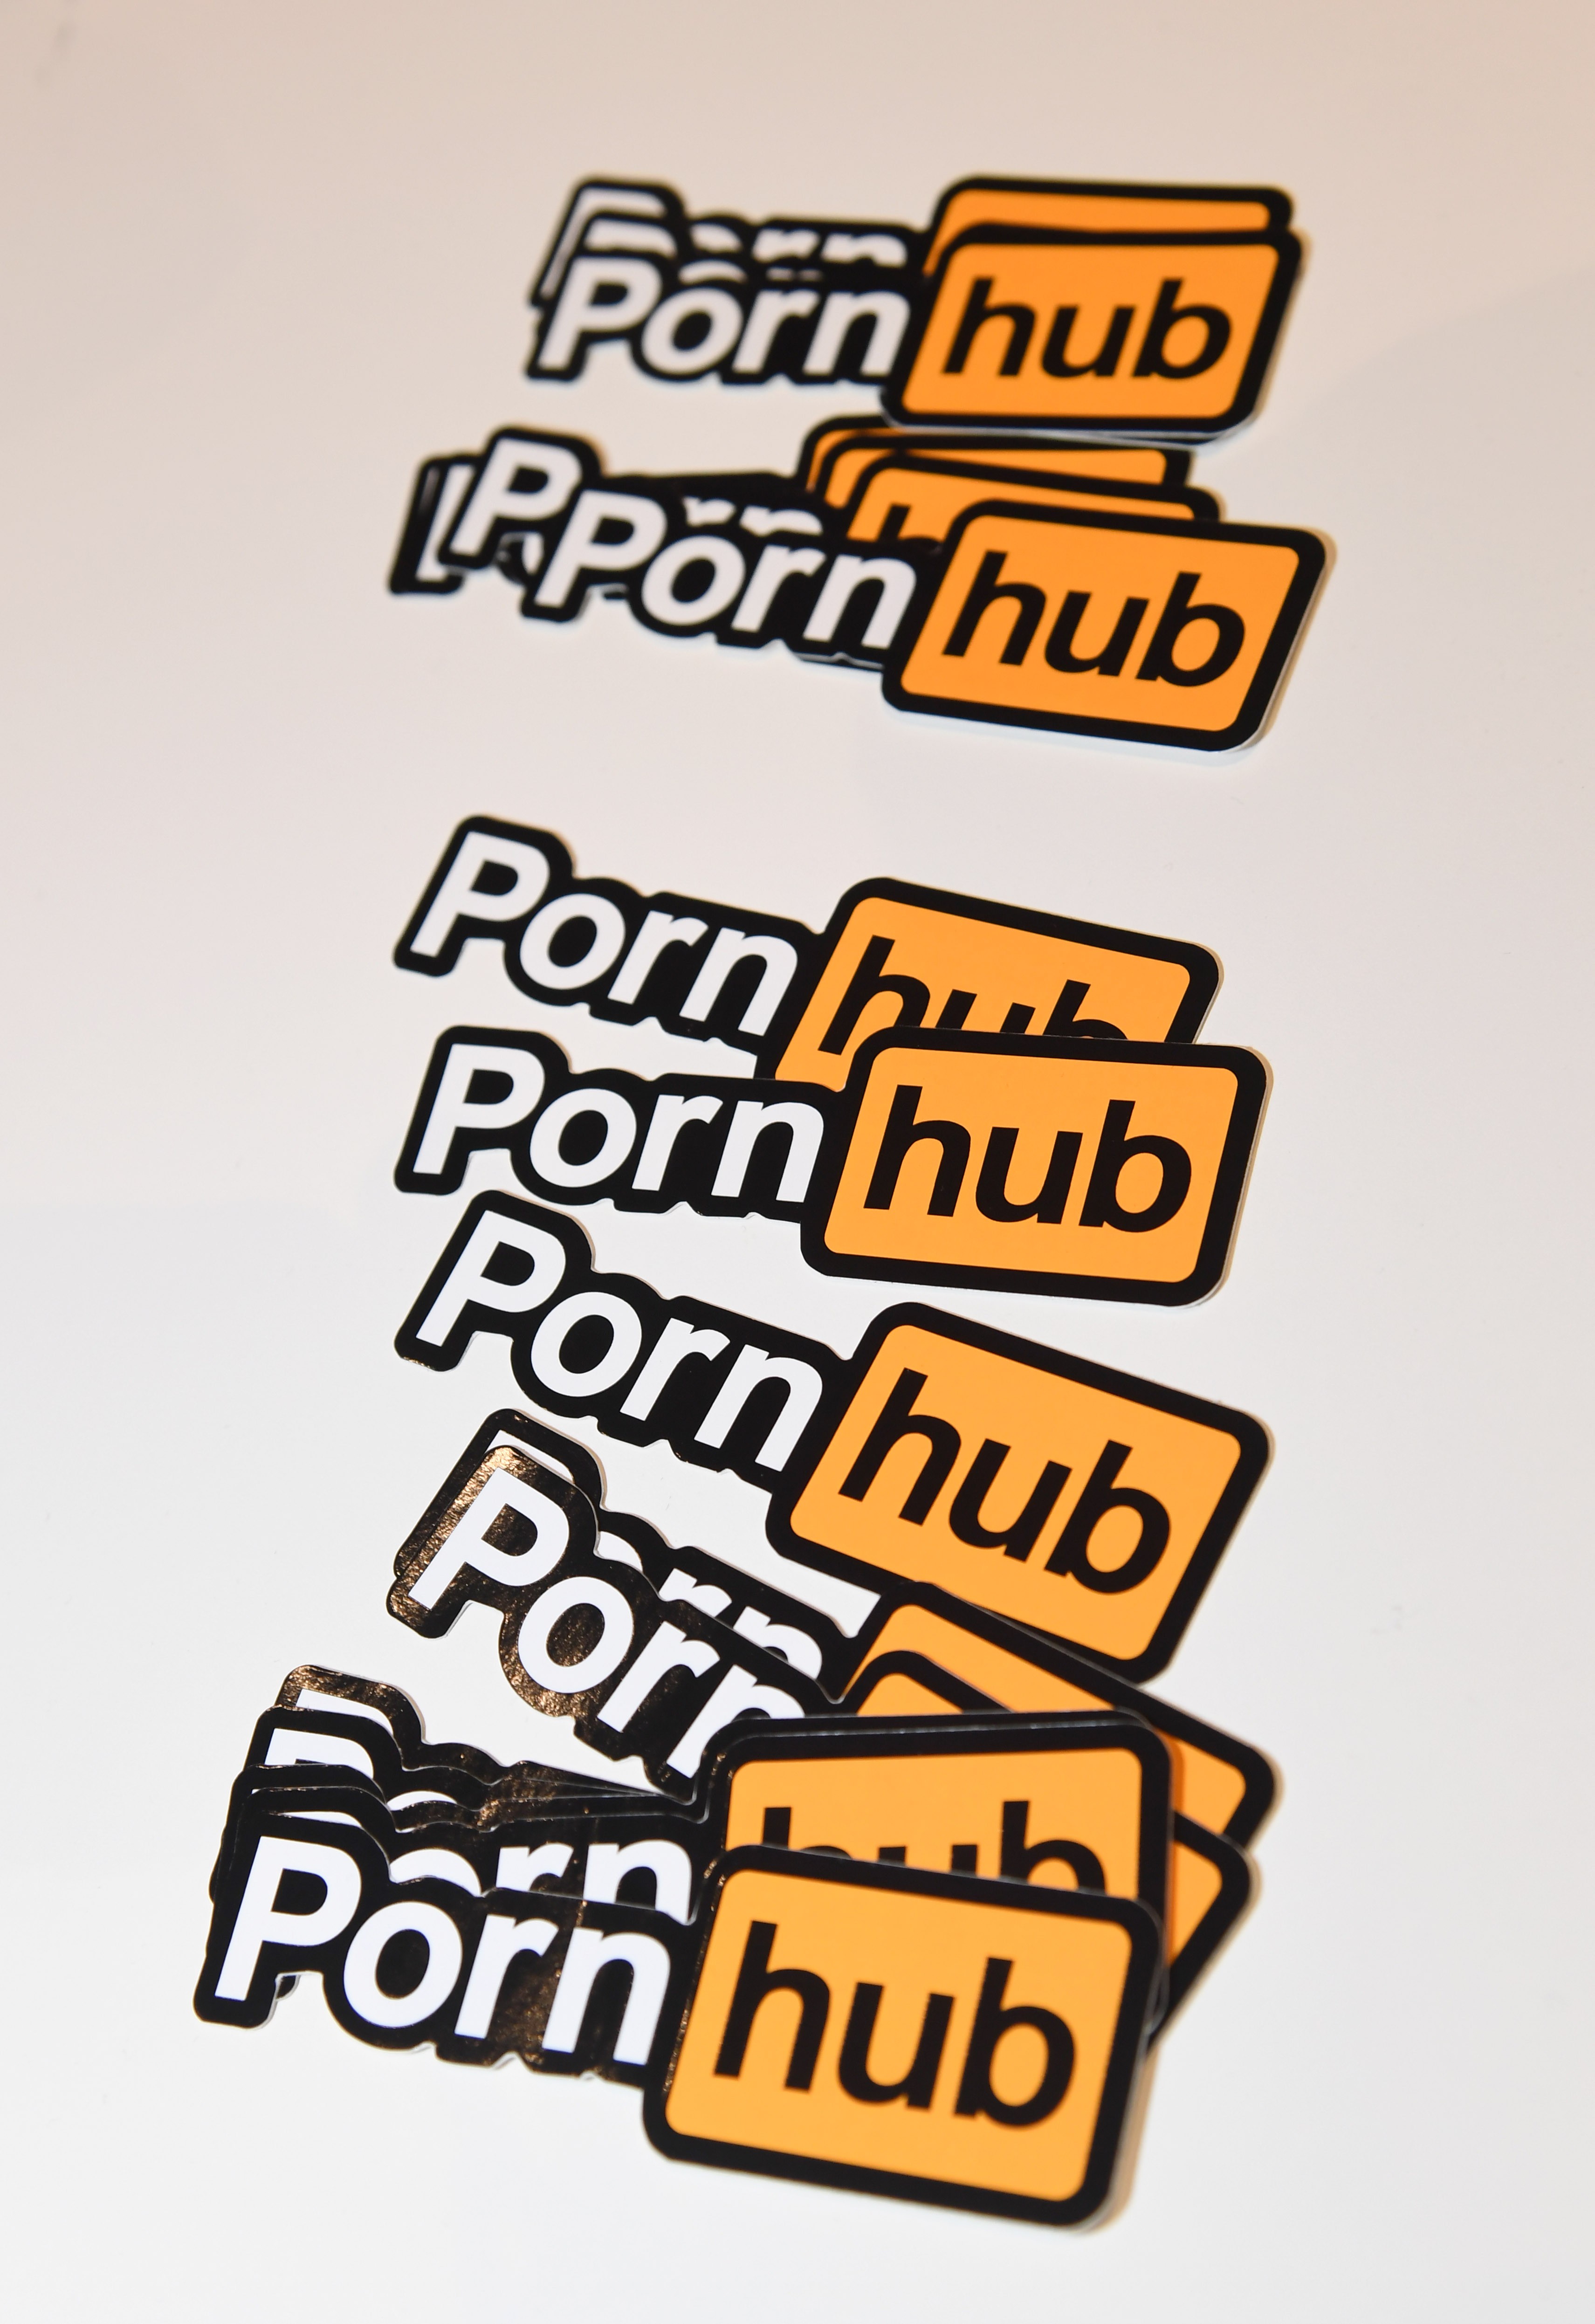 Pronhub App Download - Pornhub Just Purged All Unverified Content From the Platform